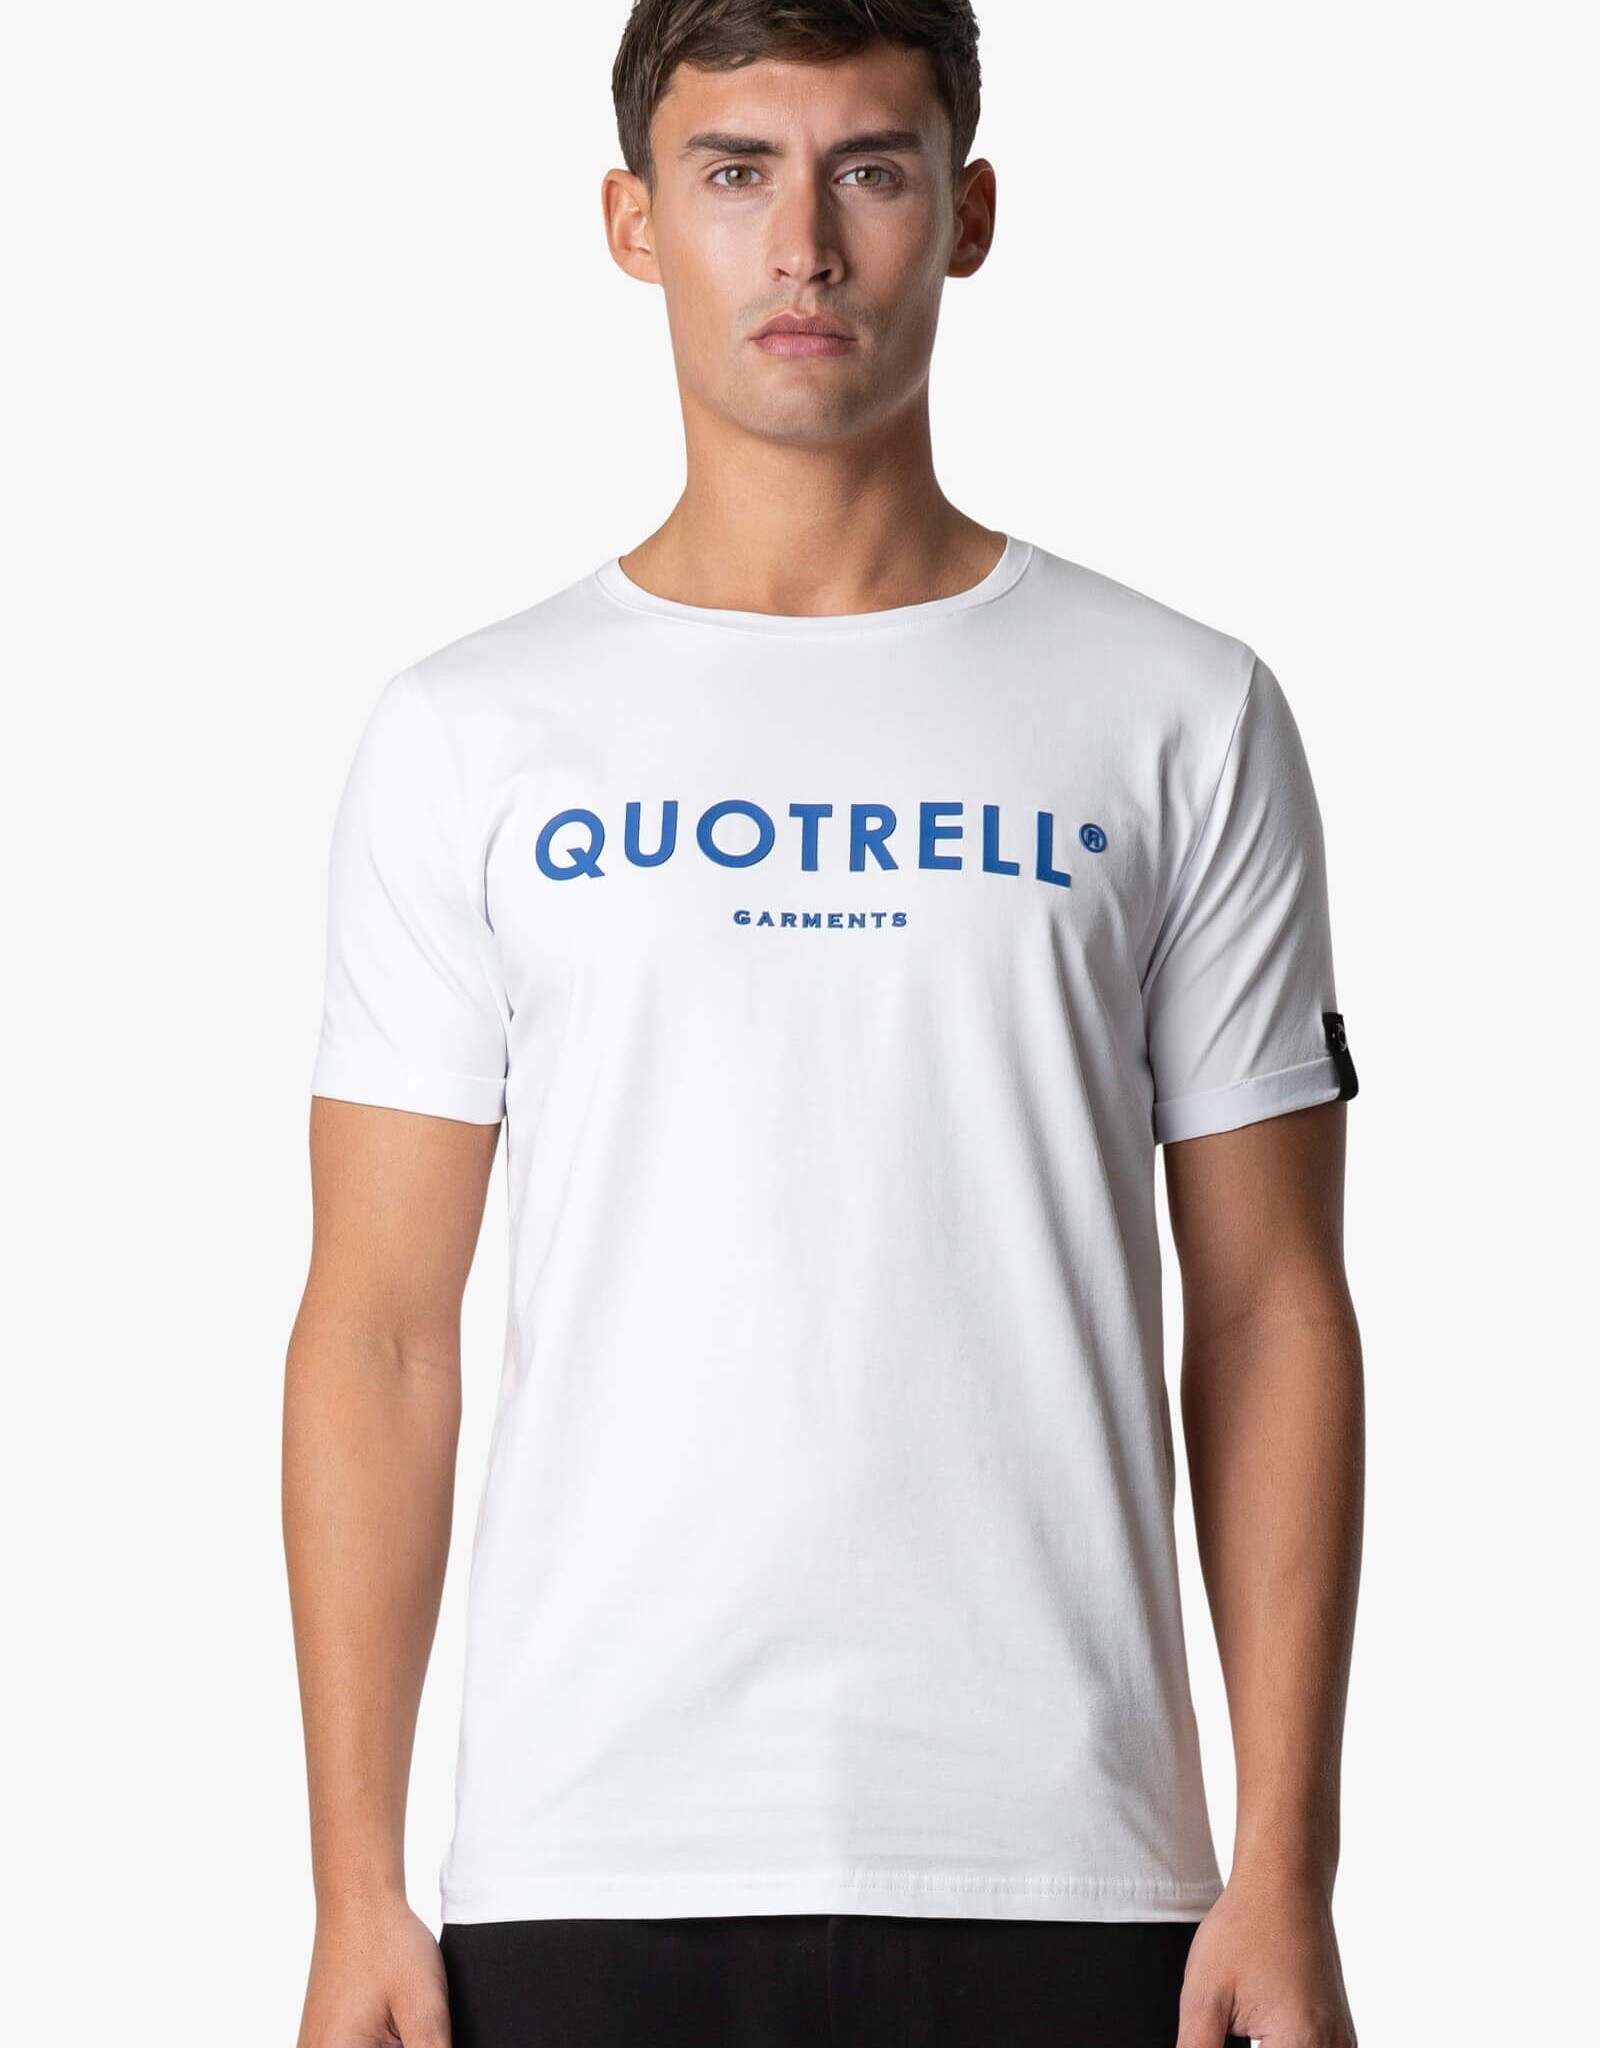 Quotrell Basic Garments T-Shirt